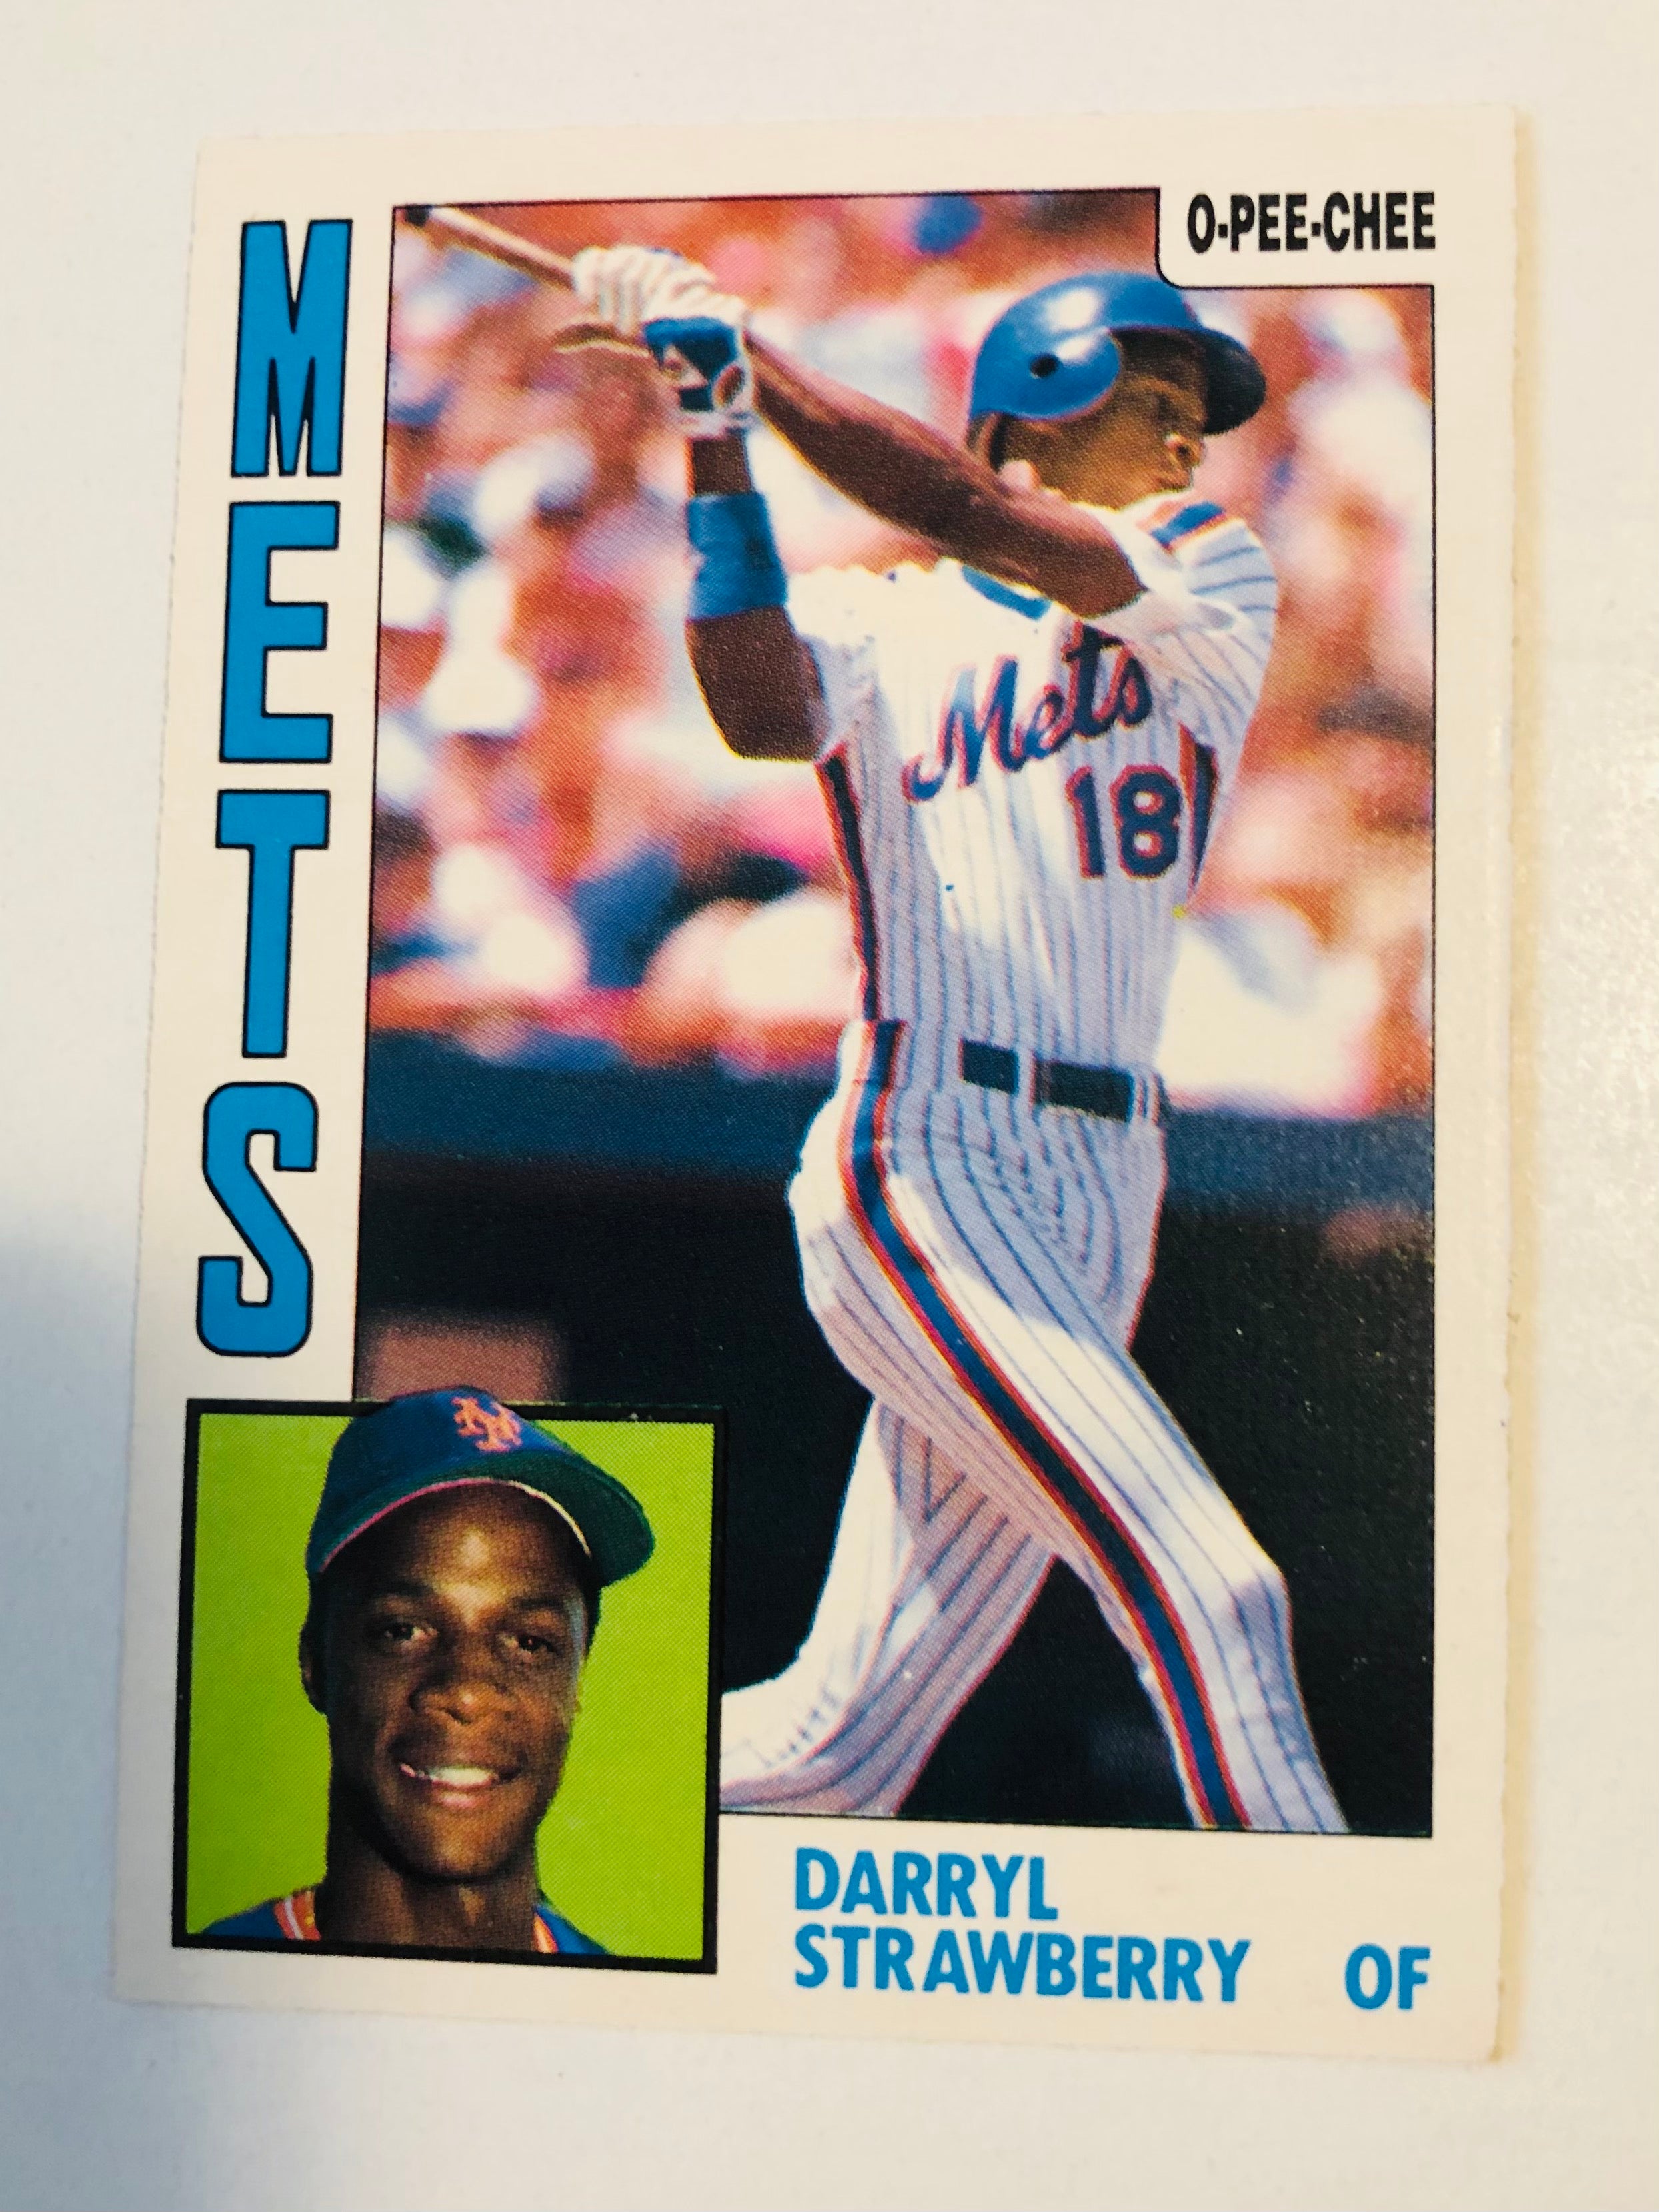 Darryl Strawberry O-pee-chee baseball rookie card 1984